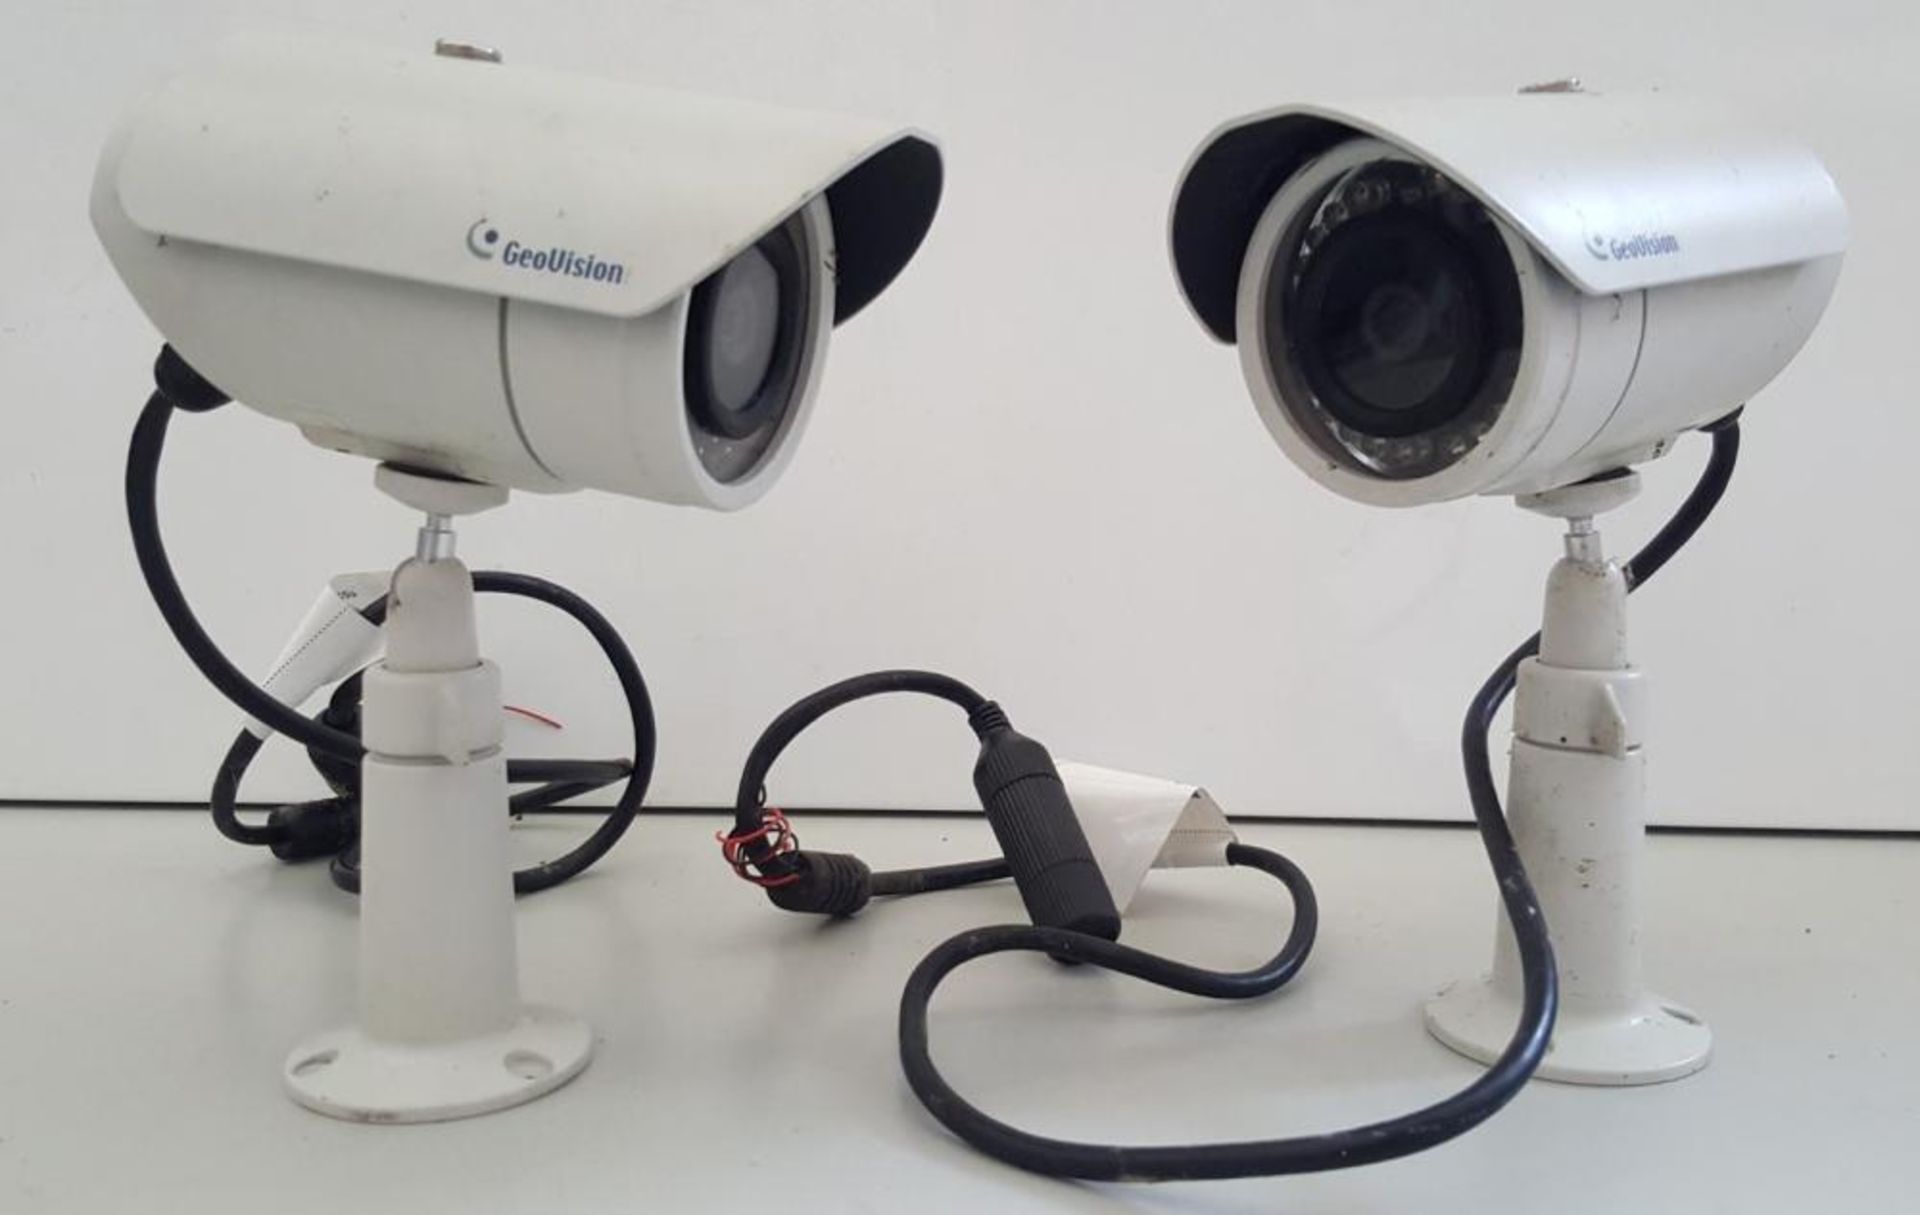 4 x Geovision Security Cameras (2 x GV-EFD1100, 2 x GV-EBL1100) - Ref CQ230/K2 - CL379 - Location: A - Image 3 of 10